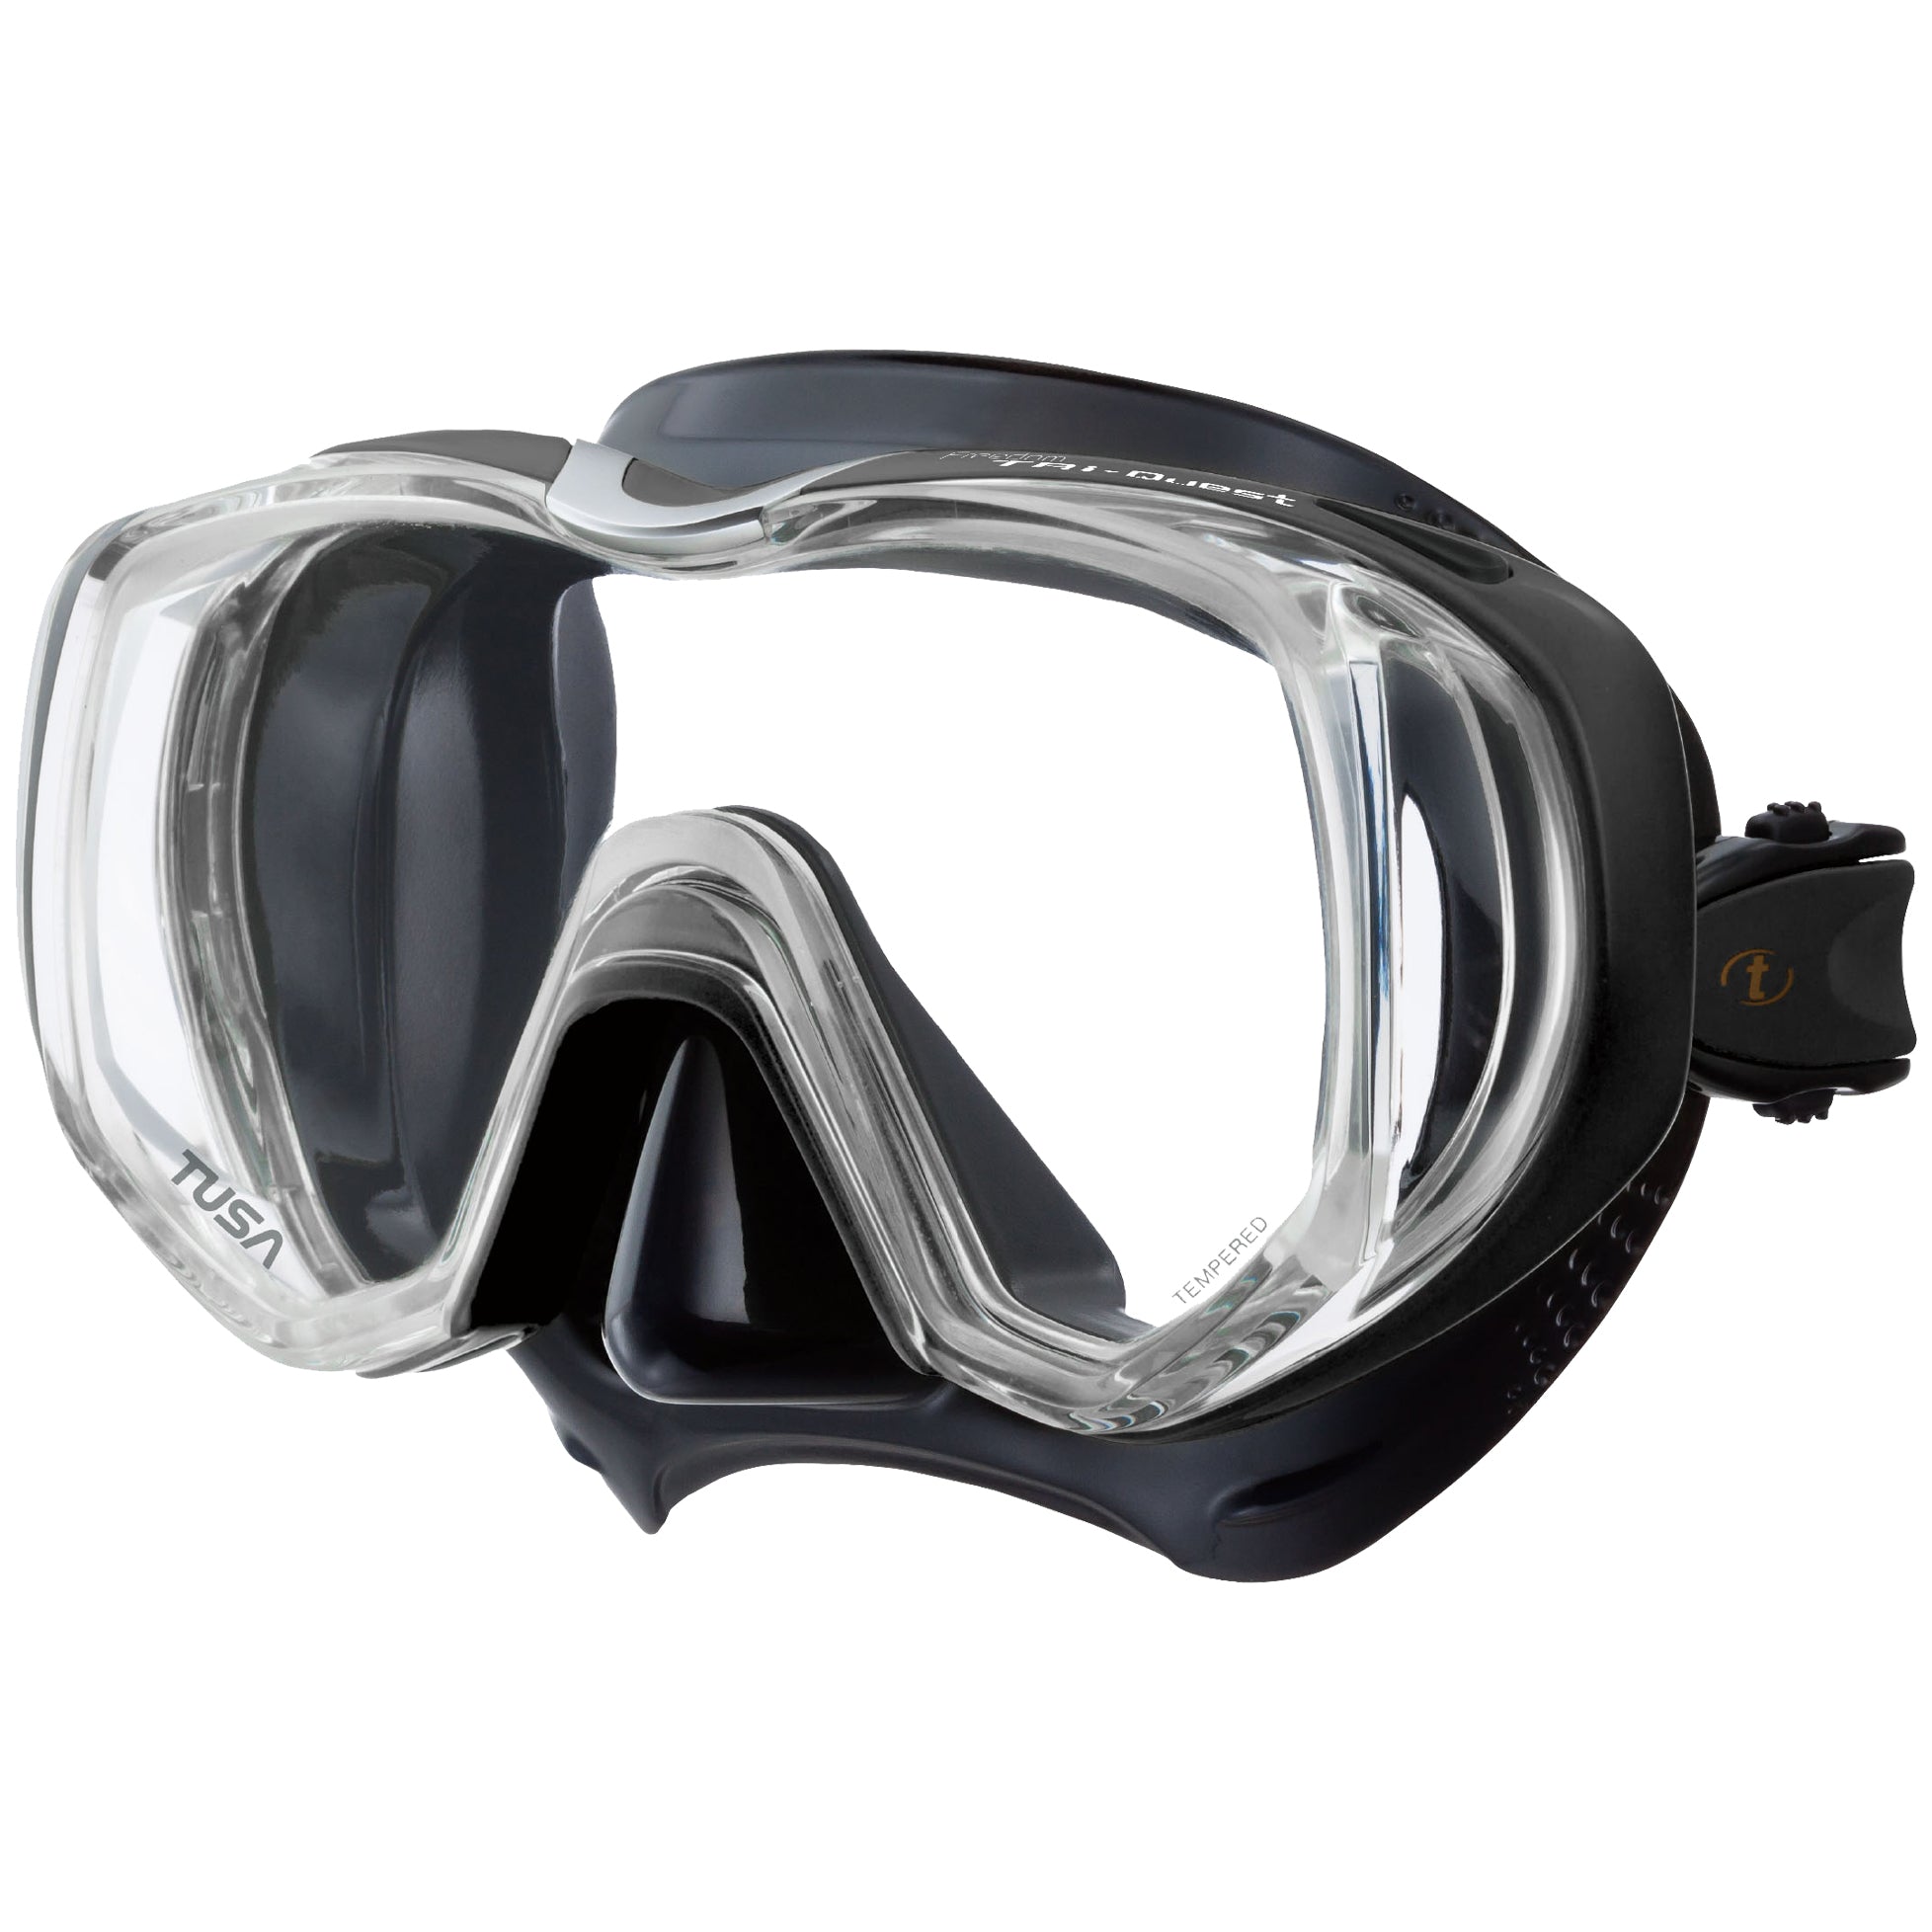 Tusa Freedom Tri Quest Mask - 3 window Dive Mask in Black Silicone